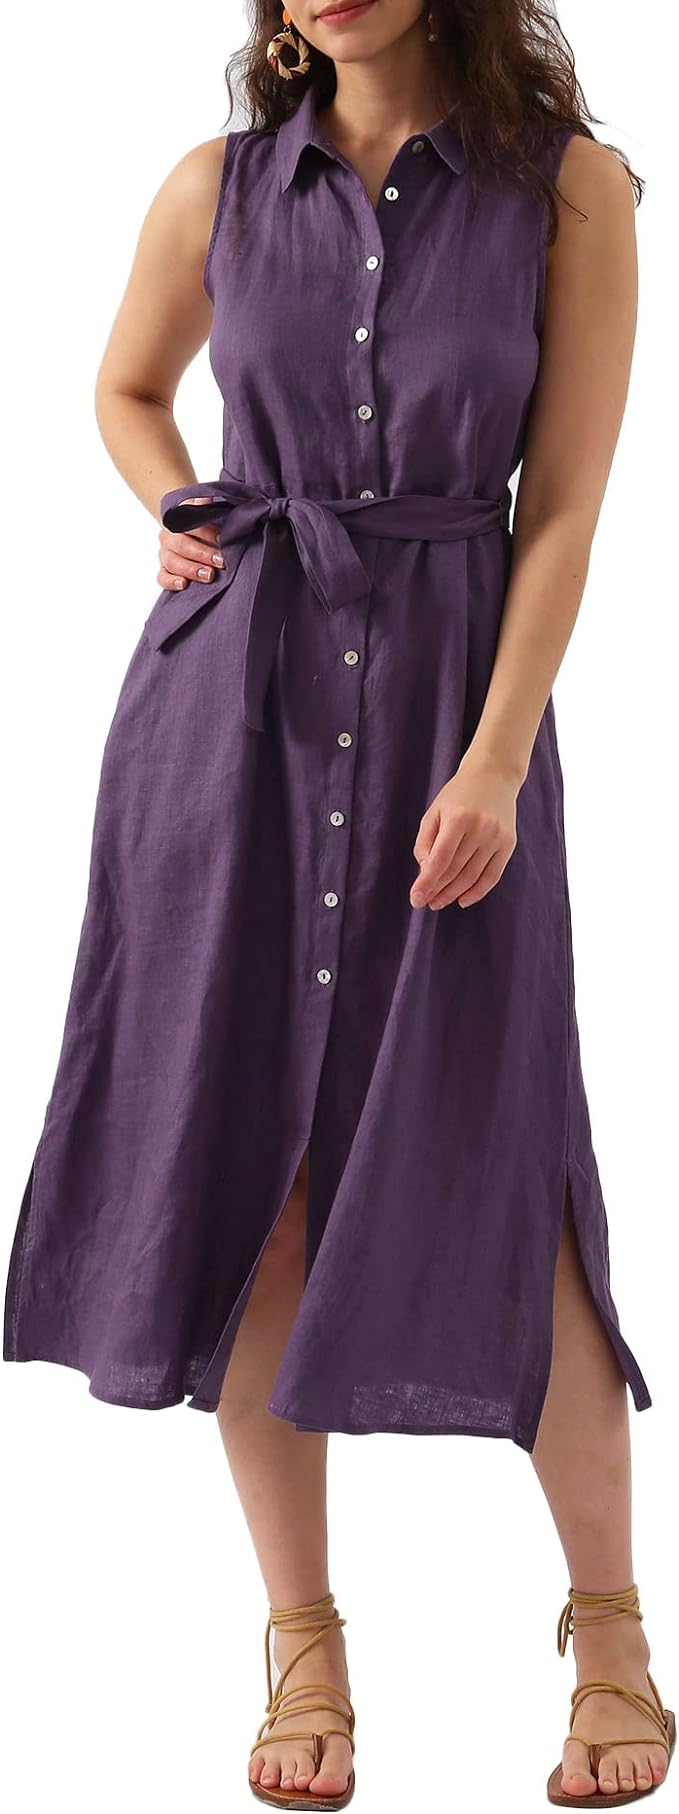 Amazhiyu Womens Pure Linen Summer Button Down Midi Dresses with Pockets and Belt Purple, Medium